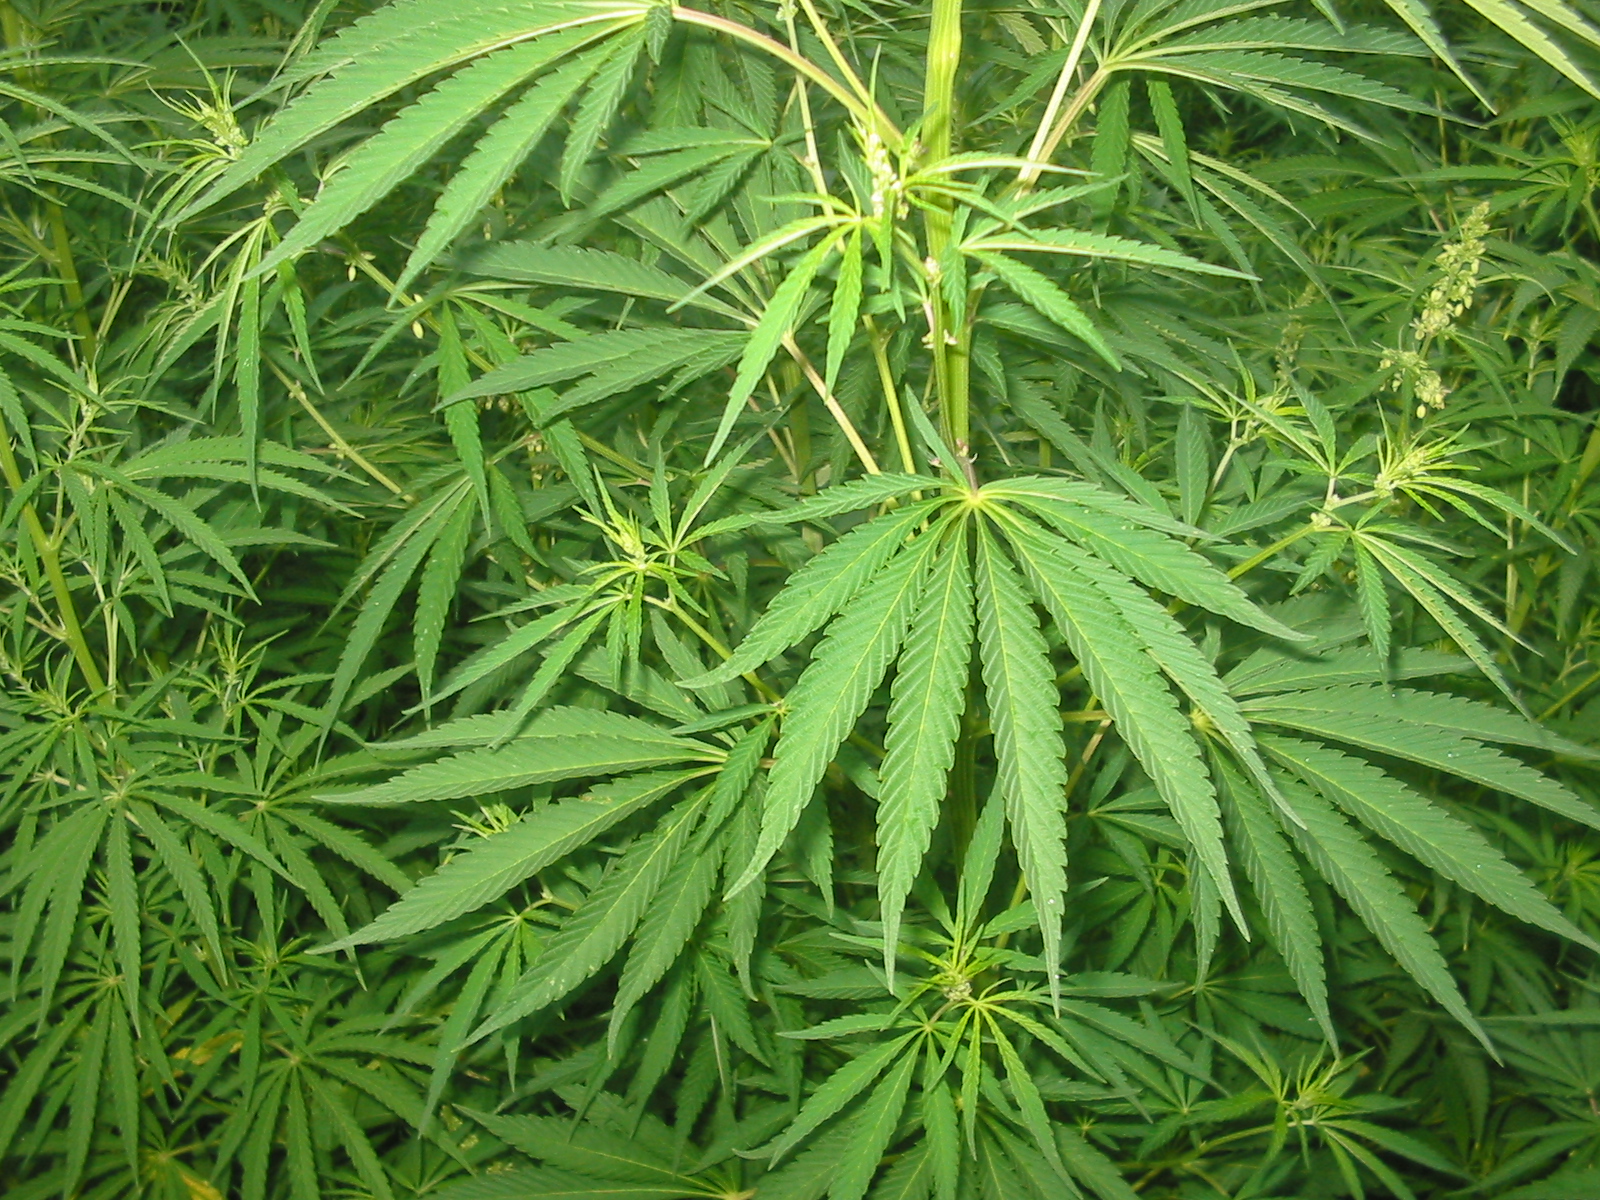 The Latest Statistics of Marijuana Legalization and Crime in Colorado